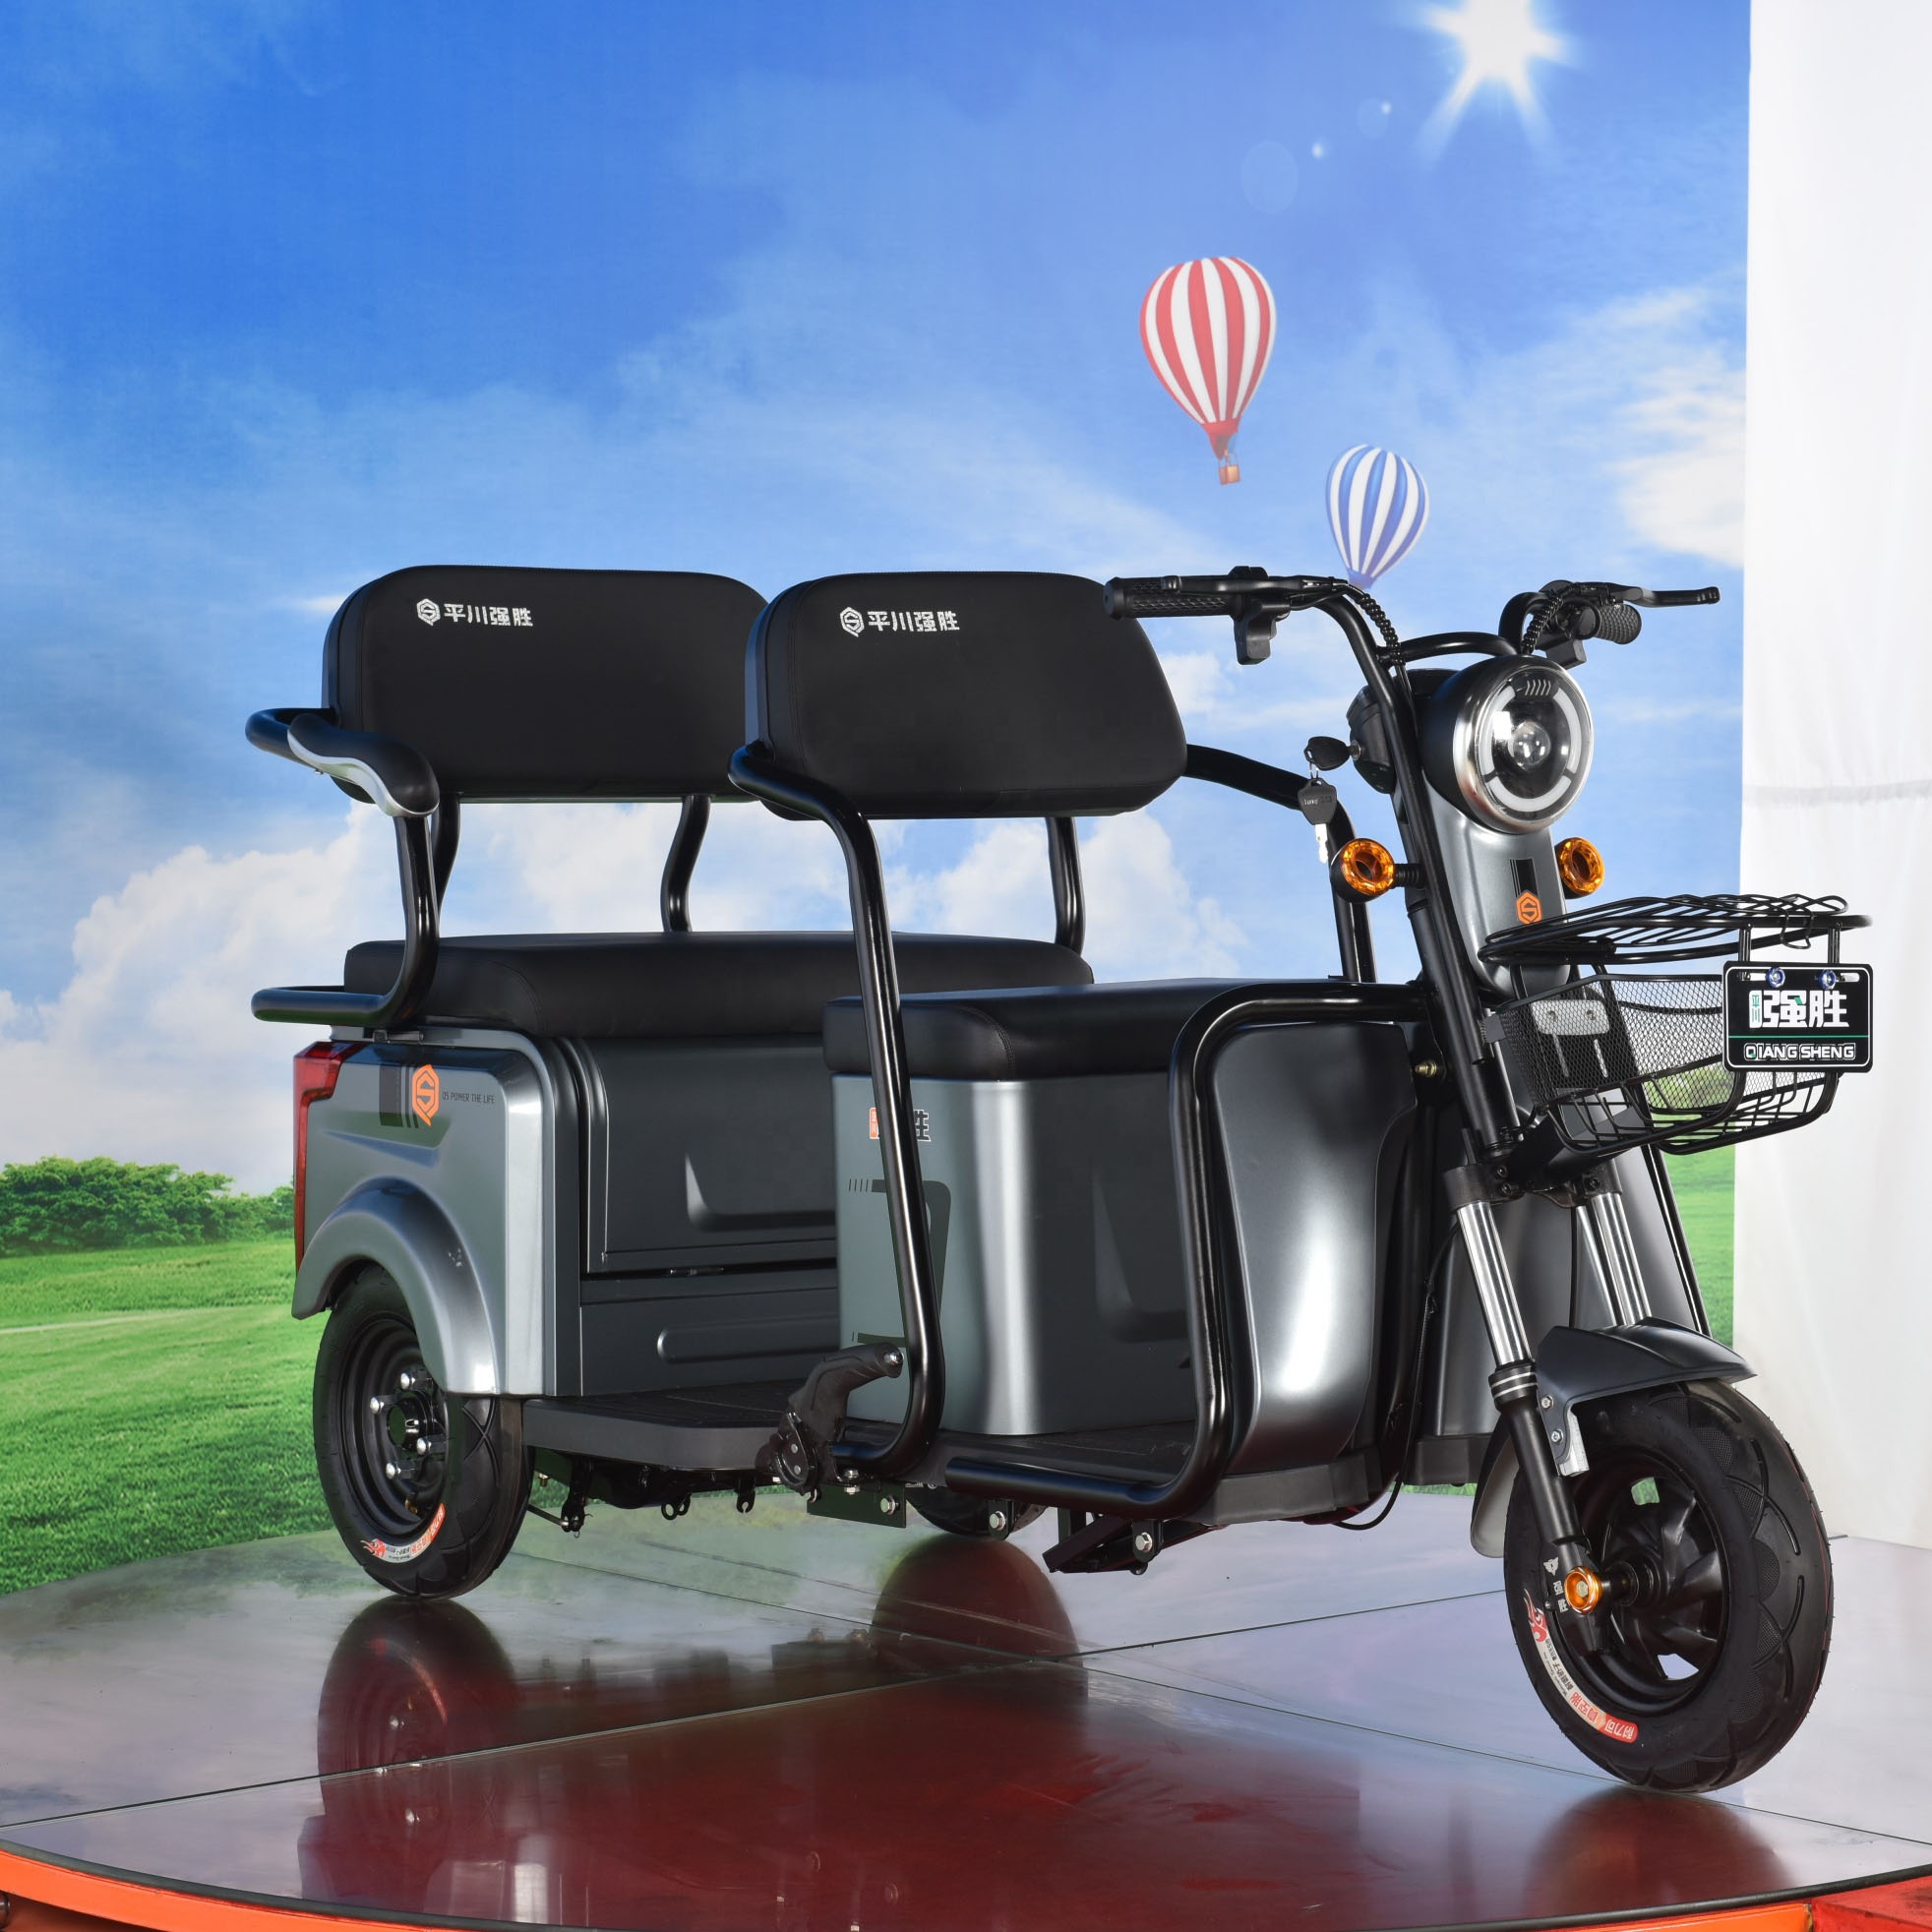 China Wholesale Electric Motorcycles Factories - Three wheel electric scooter mini metro e rickshaw small 3 wheel car – Qiangsheng